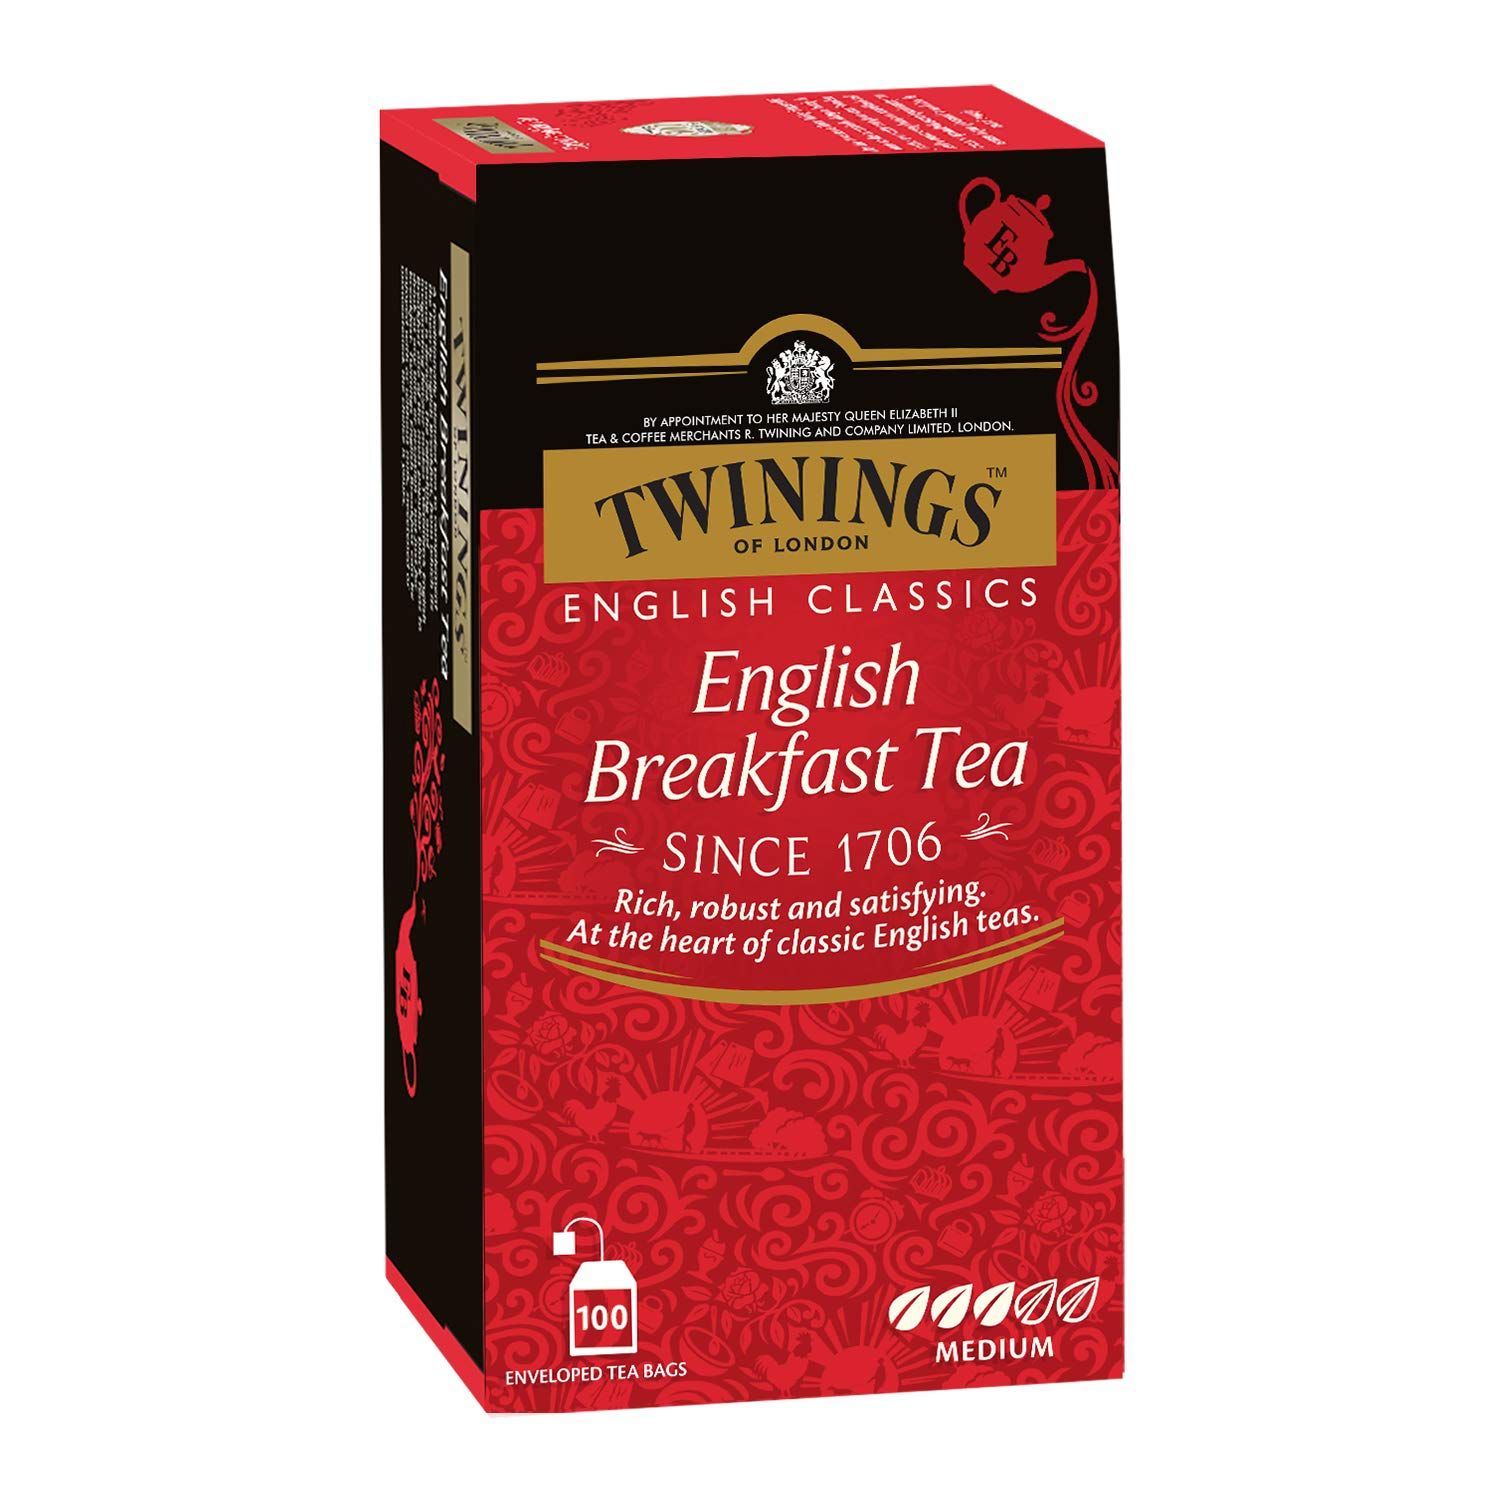 Twinings English Breakfats Tea Image